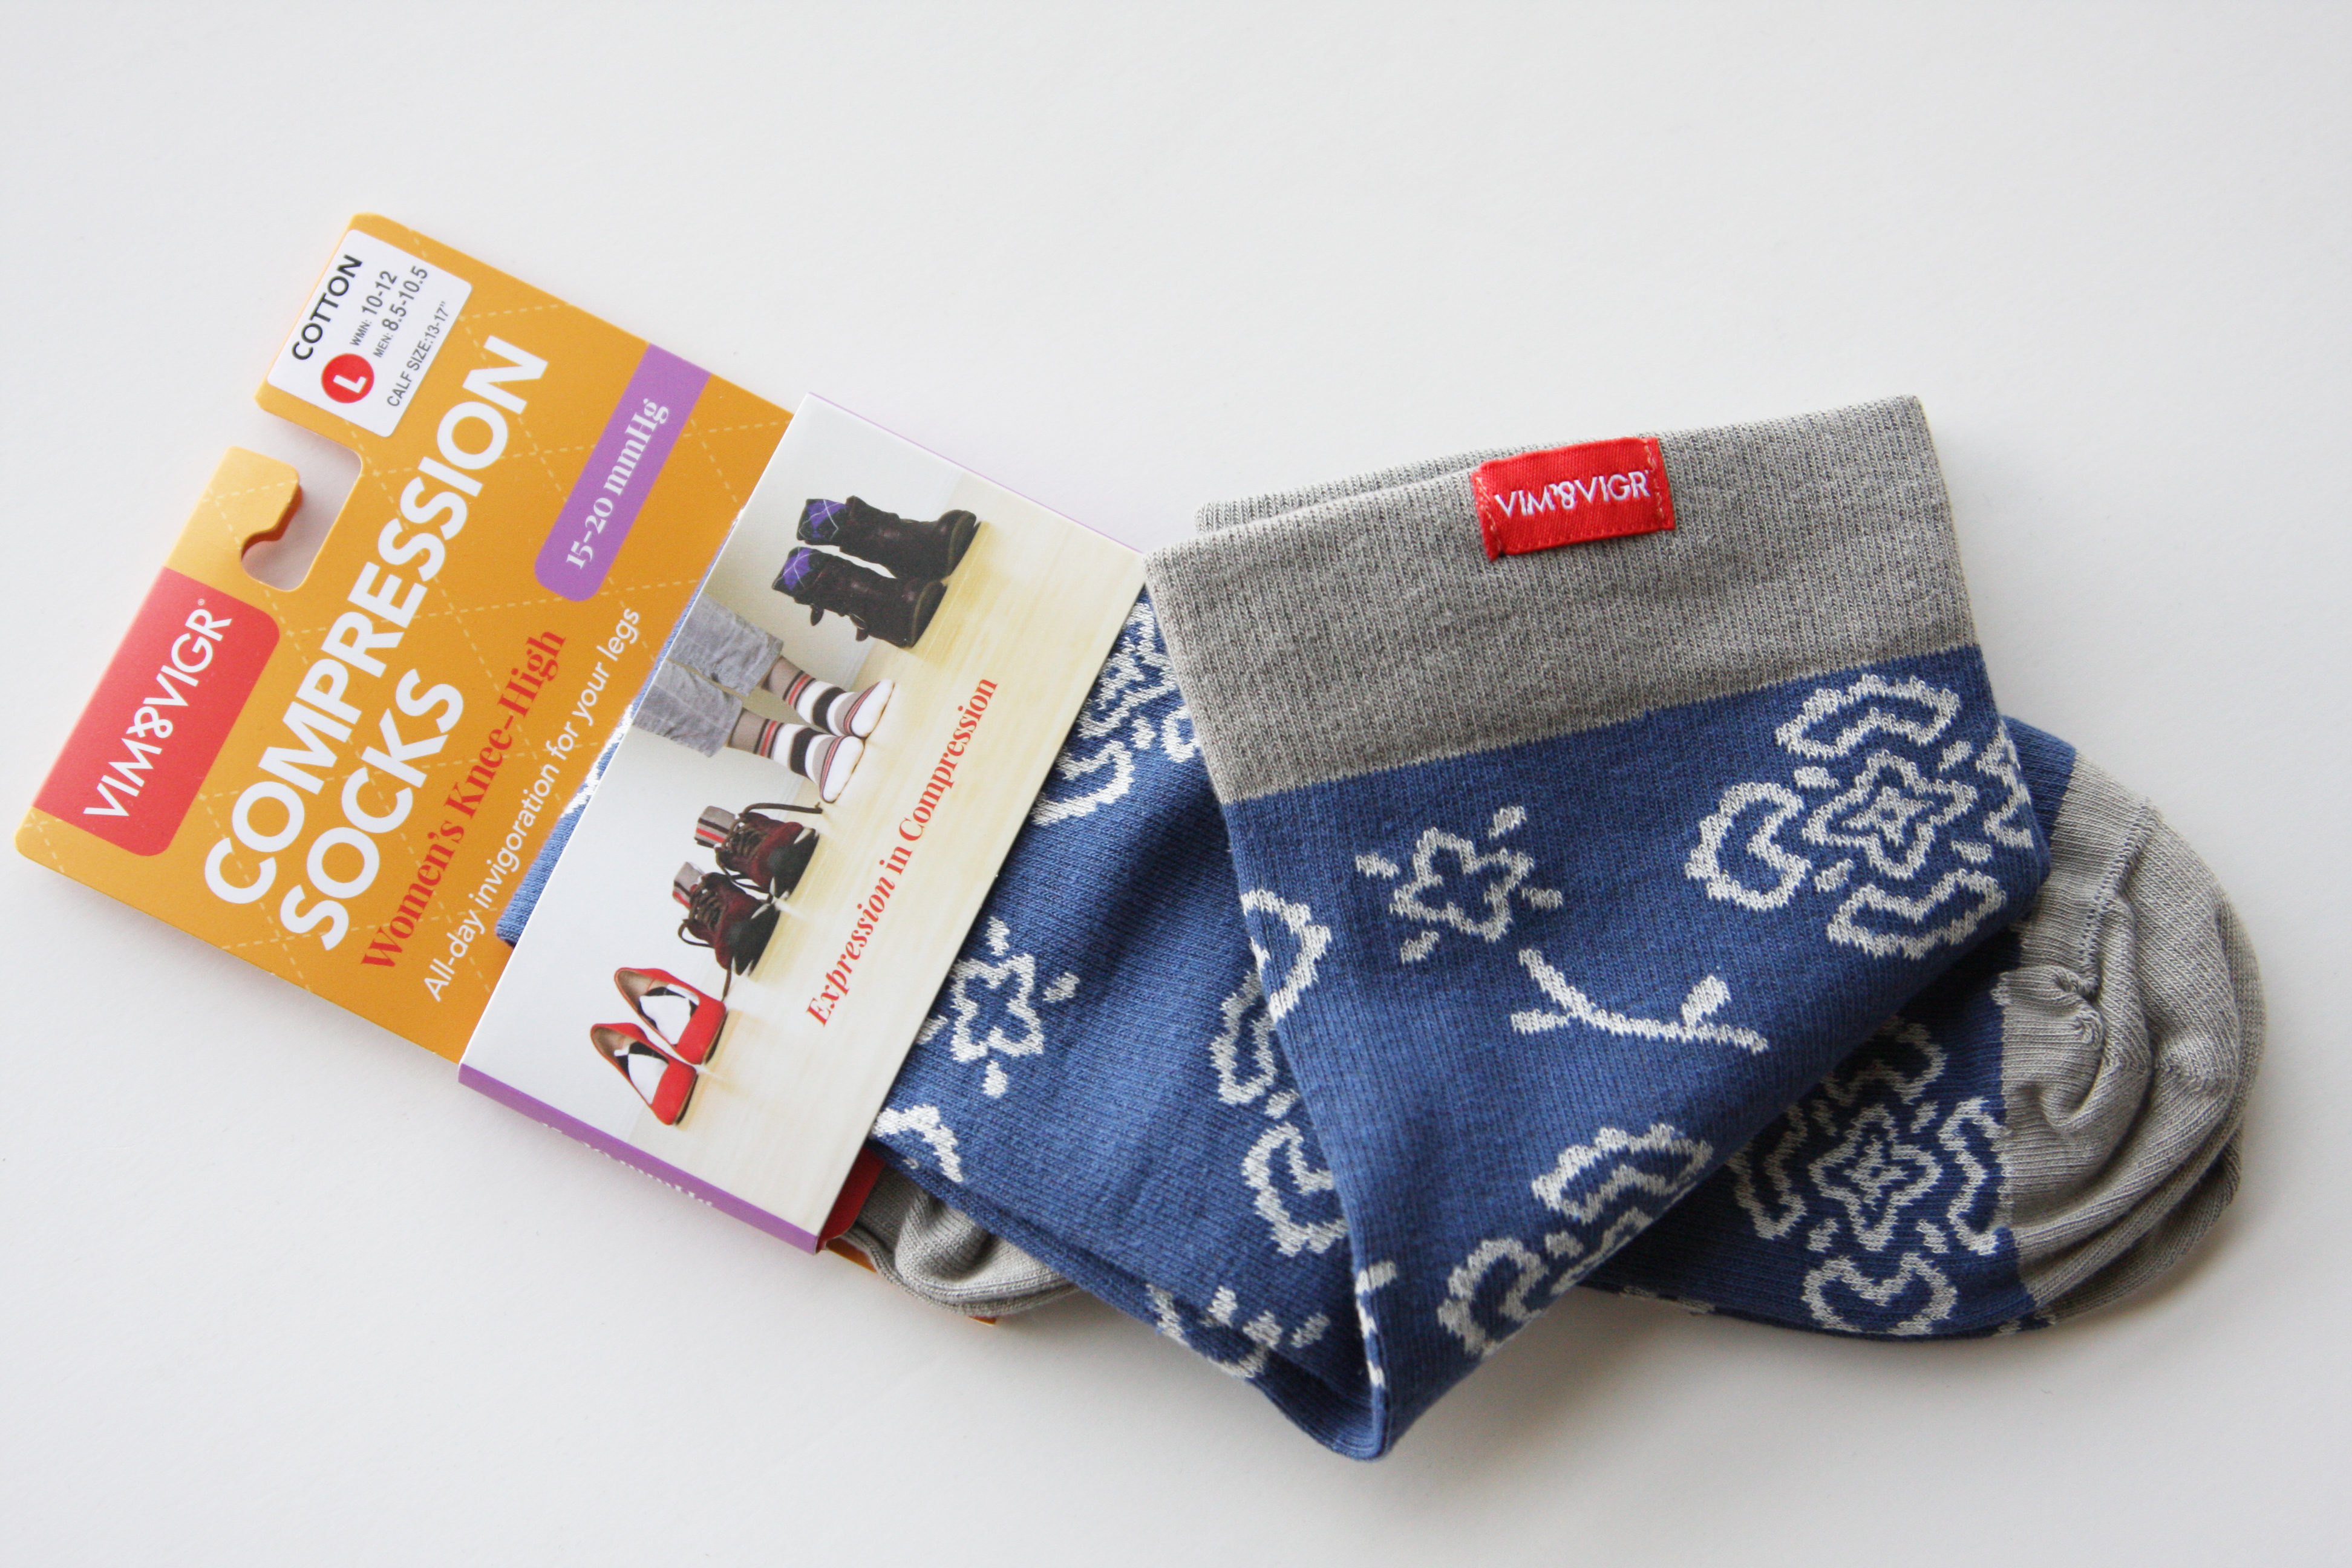 VIM & VIGR Compression Socks in package with folded socks